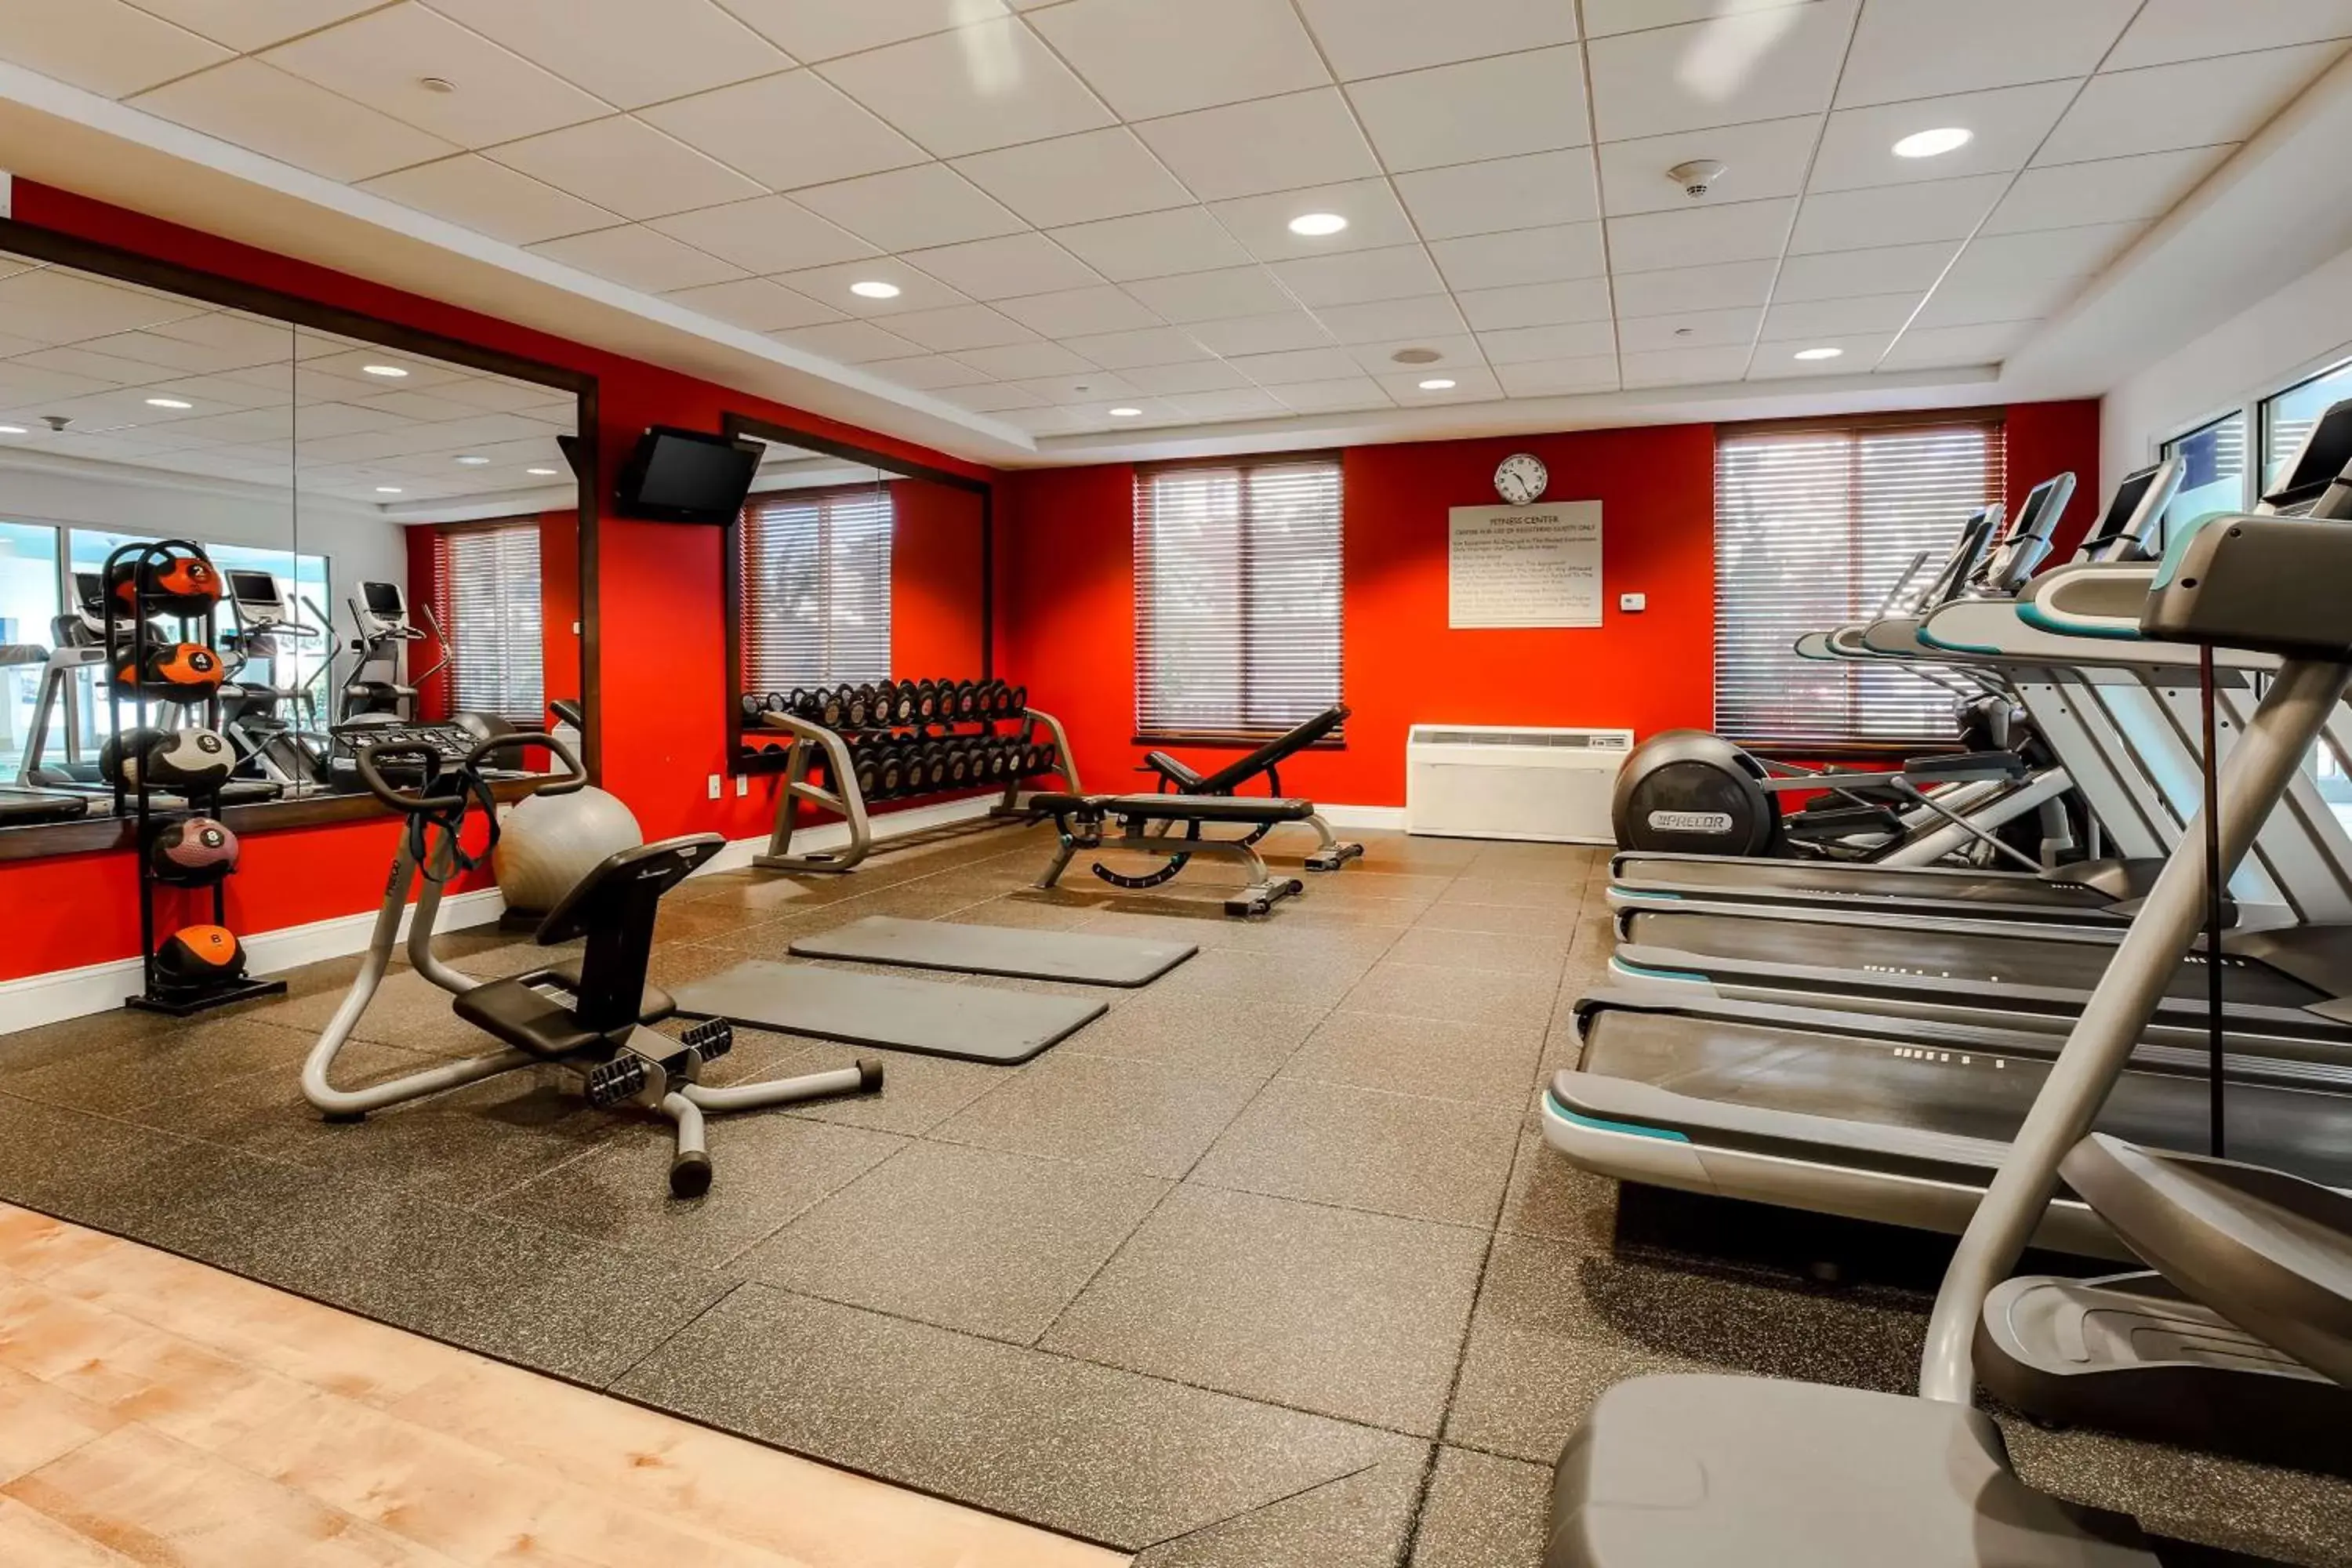 Fitness centre/facilities, Fitness Center/Facilities in Hilton Garden Inn Melville